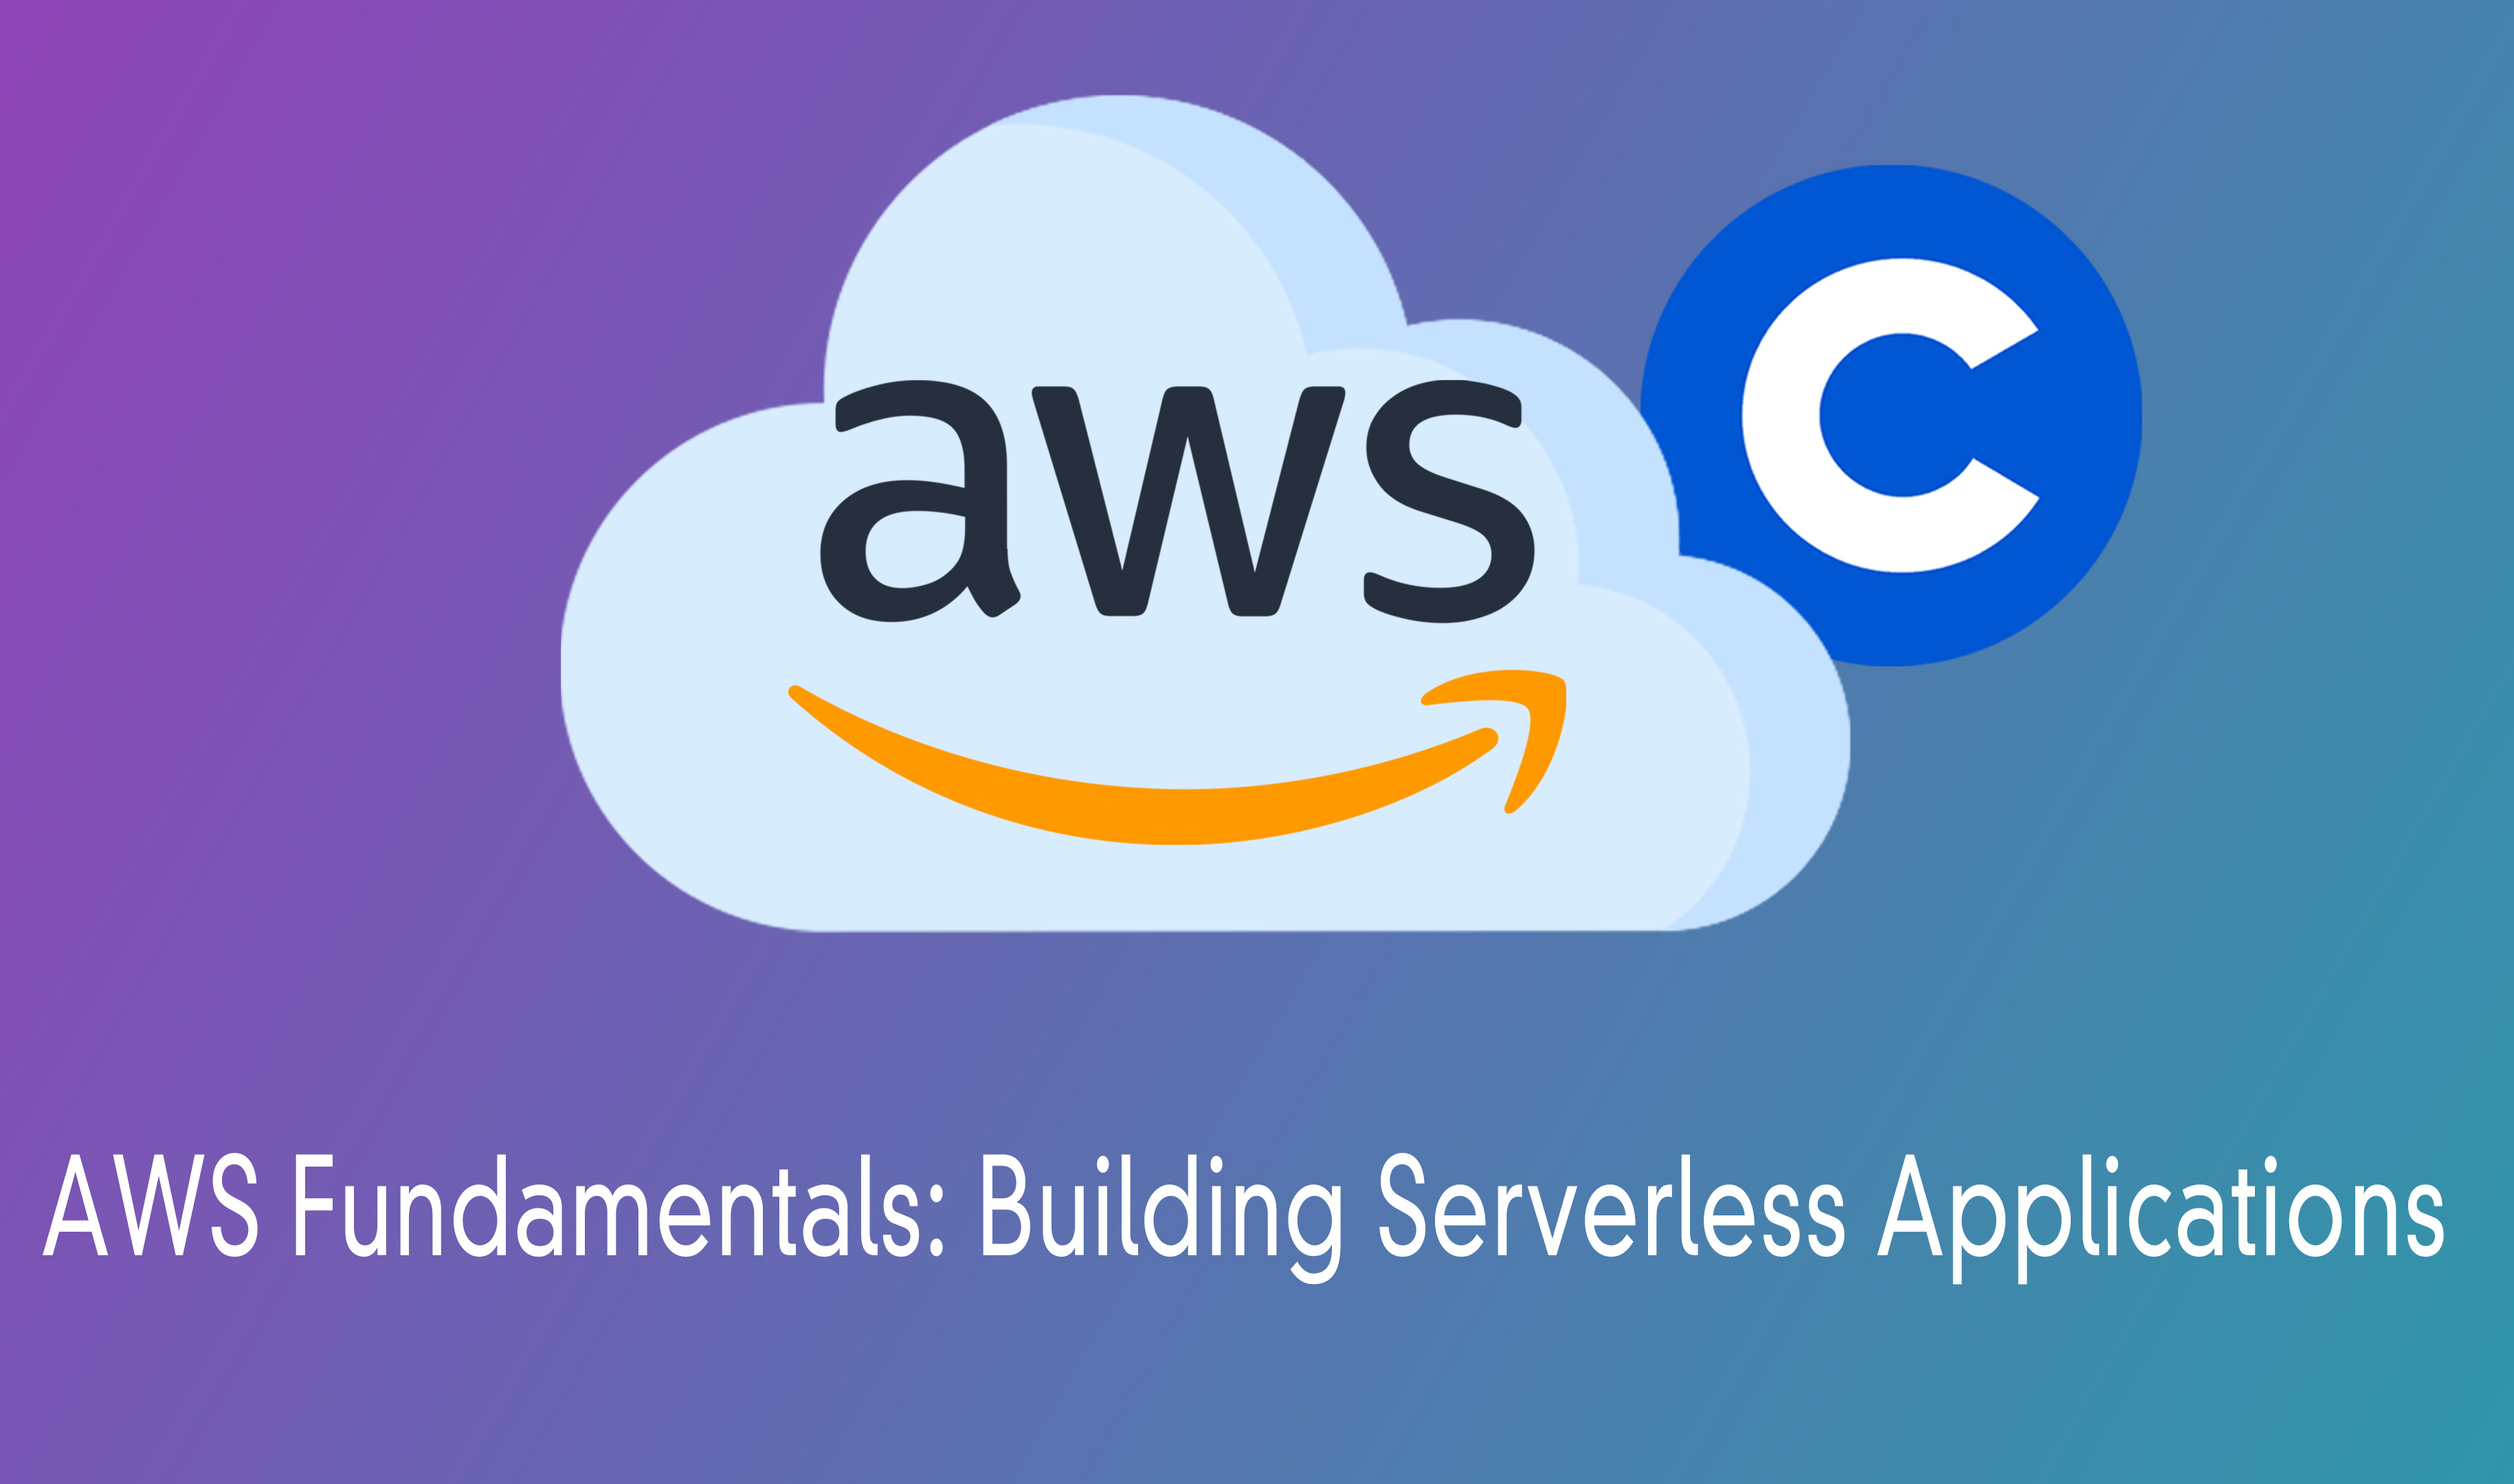 AWS Fundamentals: Building Serverless Applications